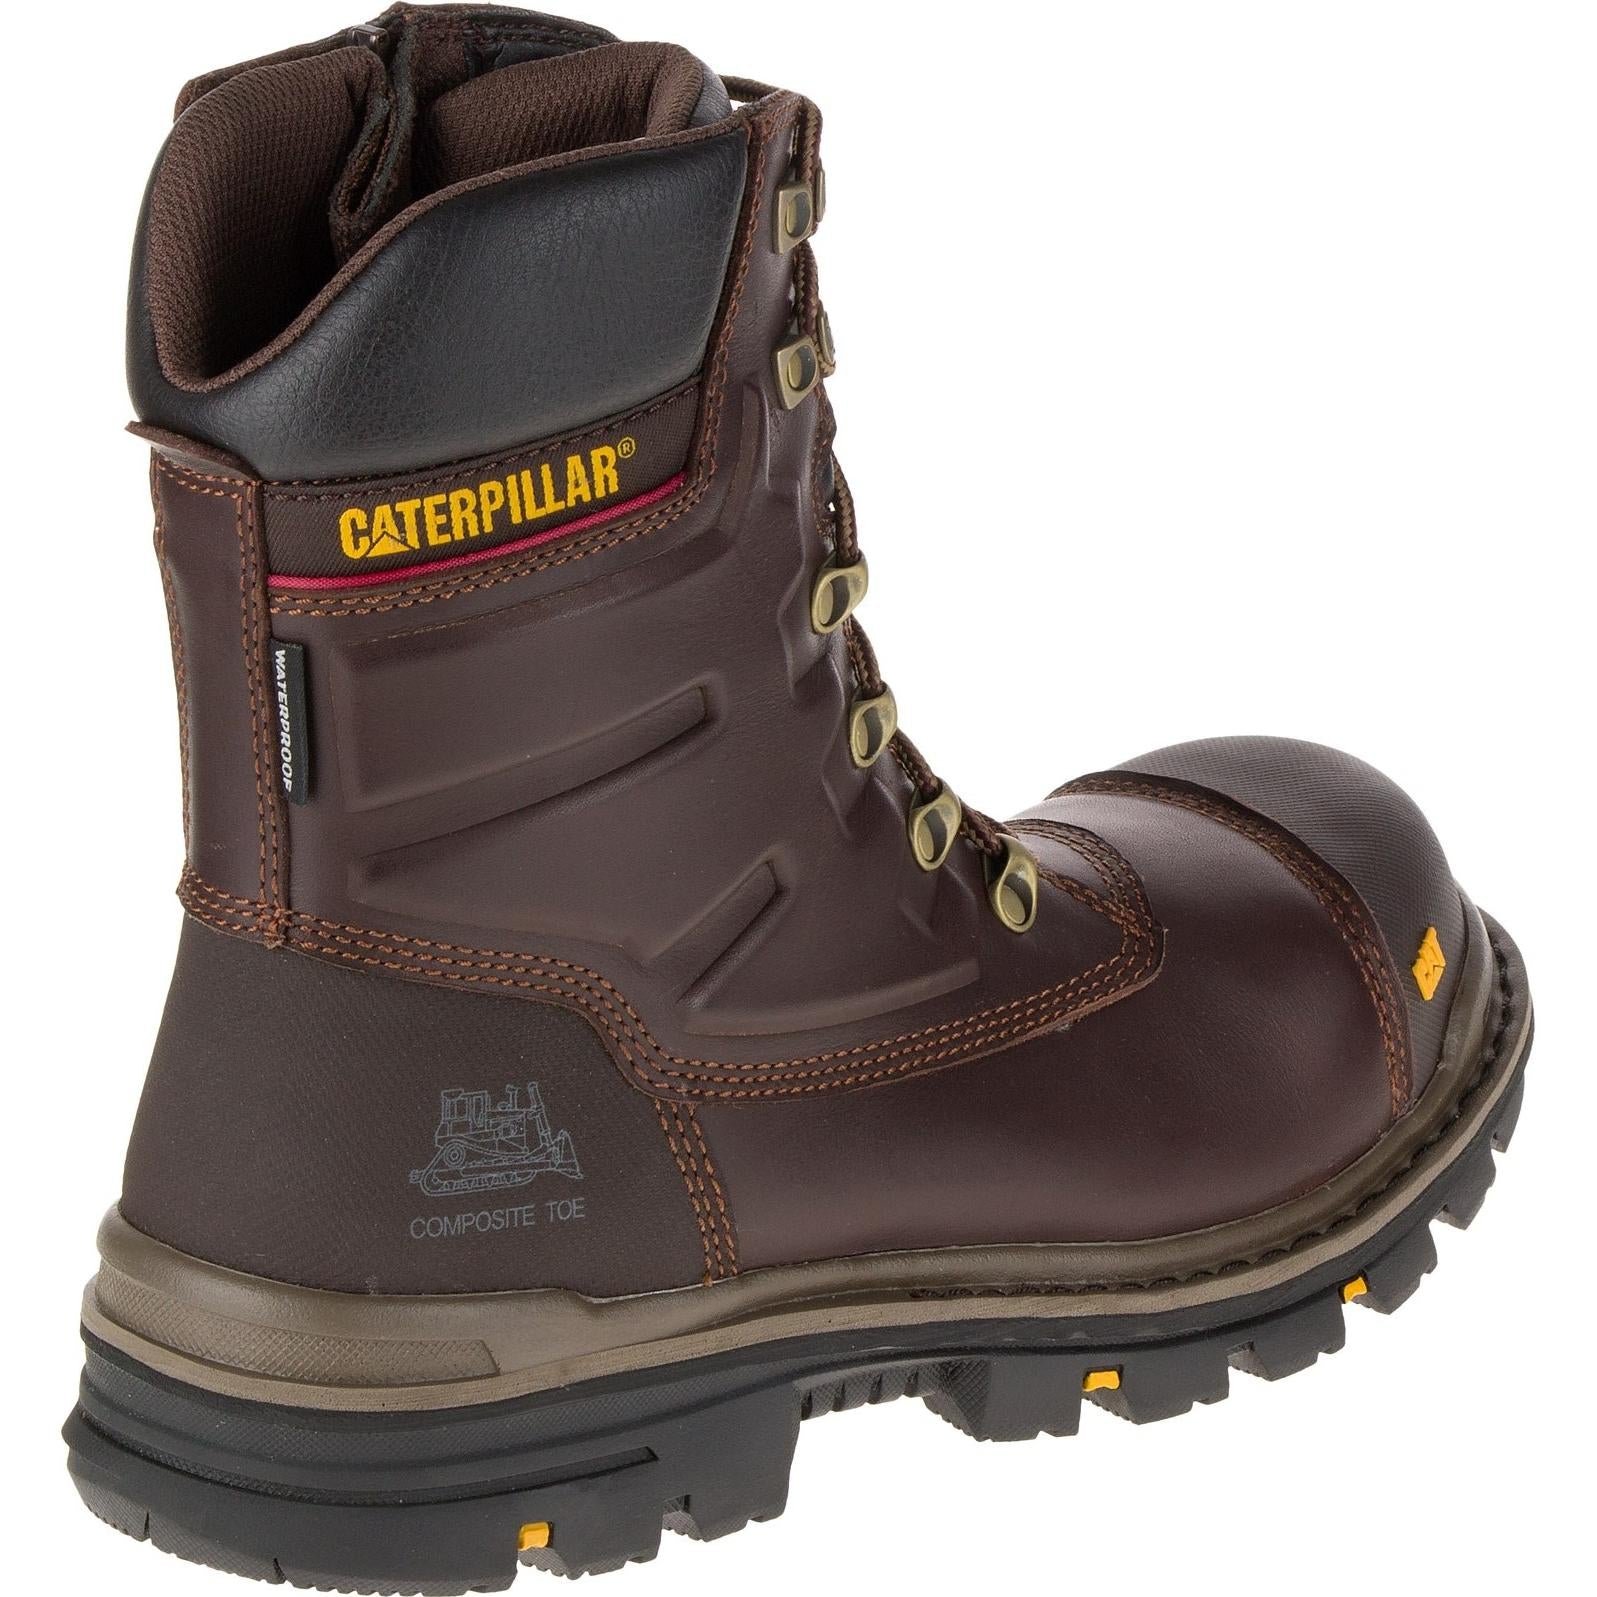 Caterpillar Premier Safety Boot